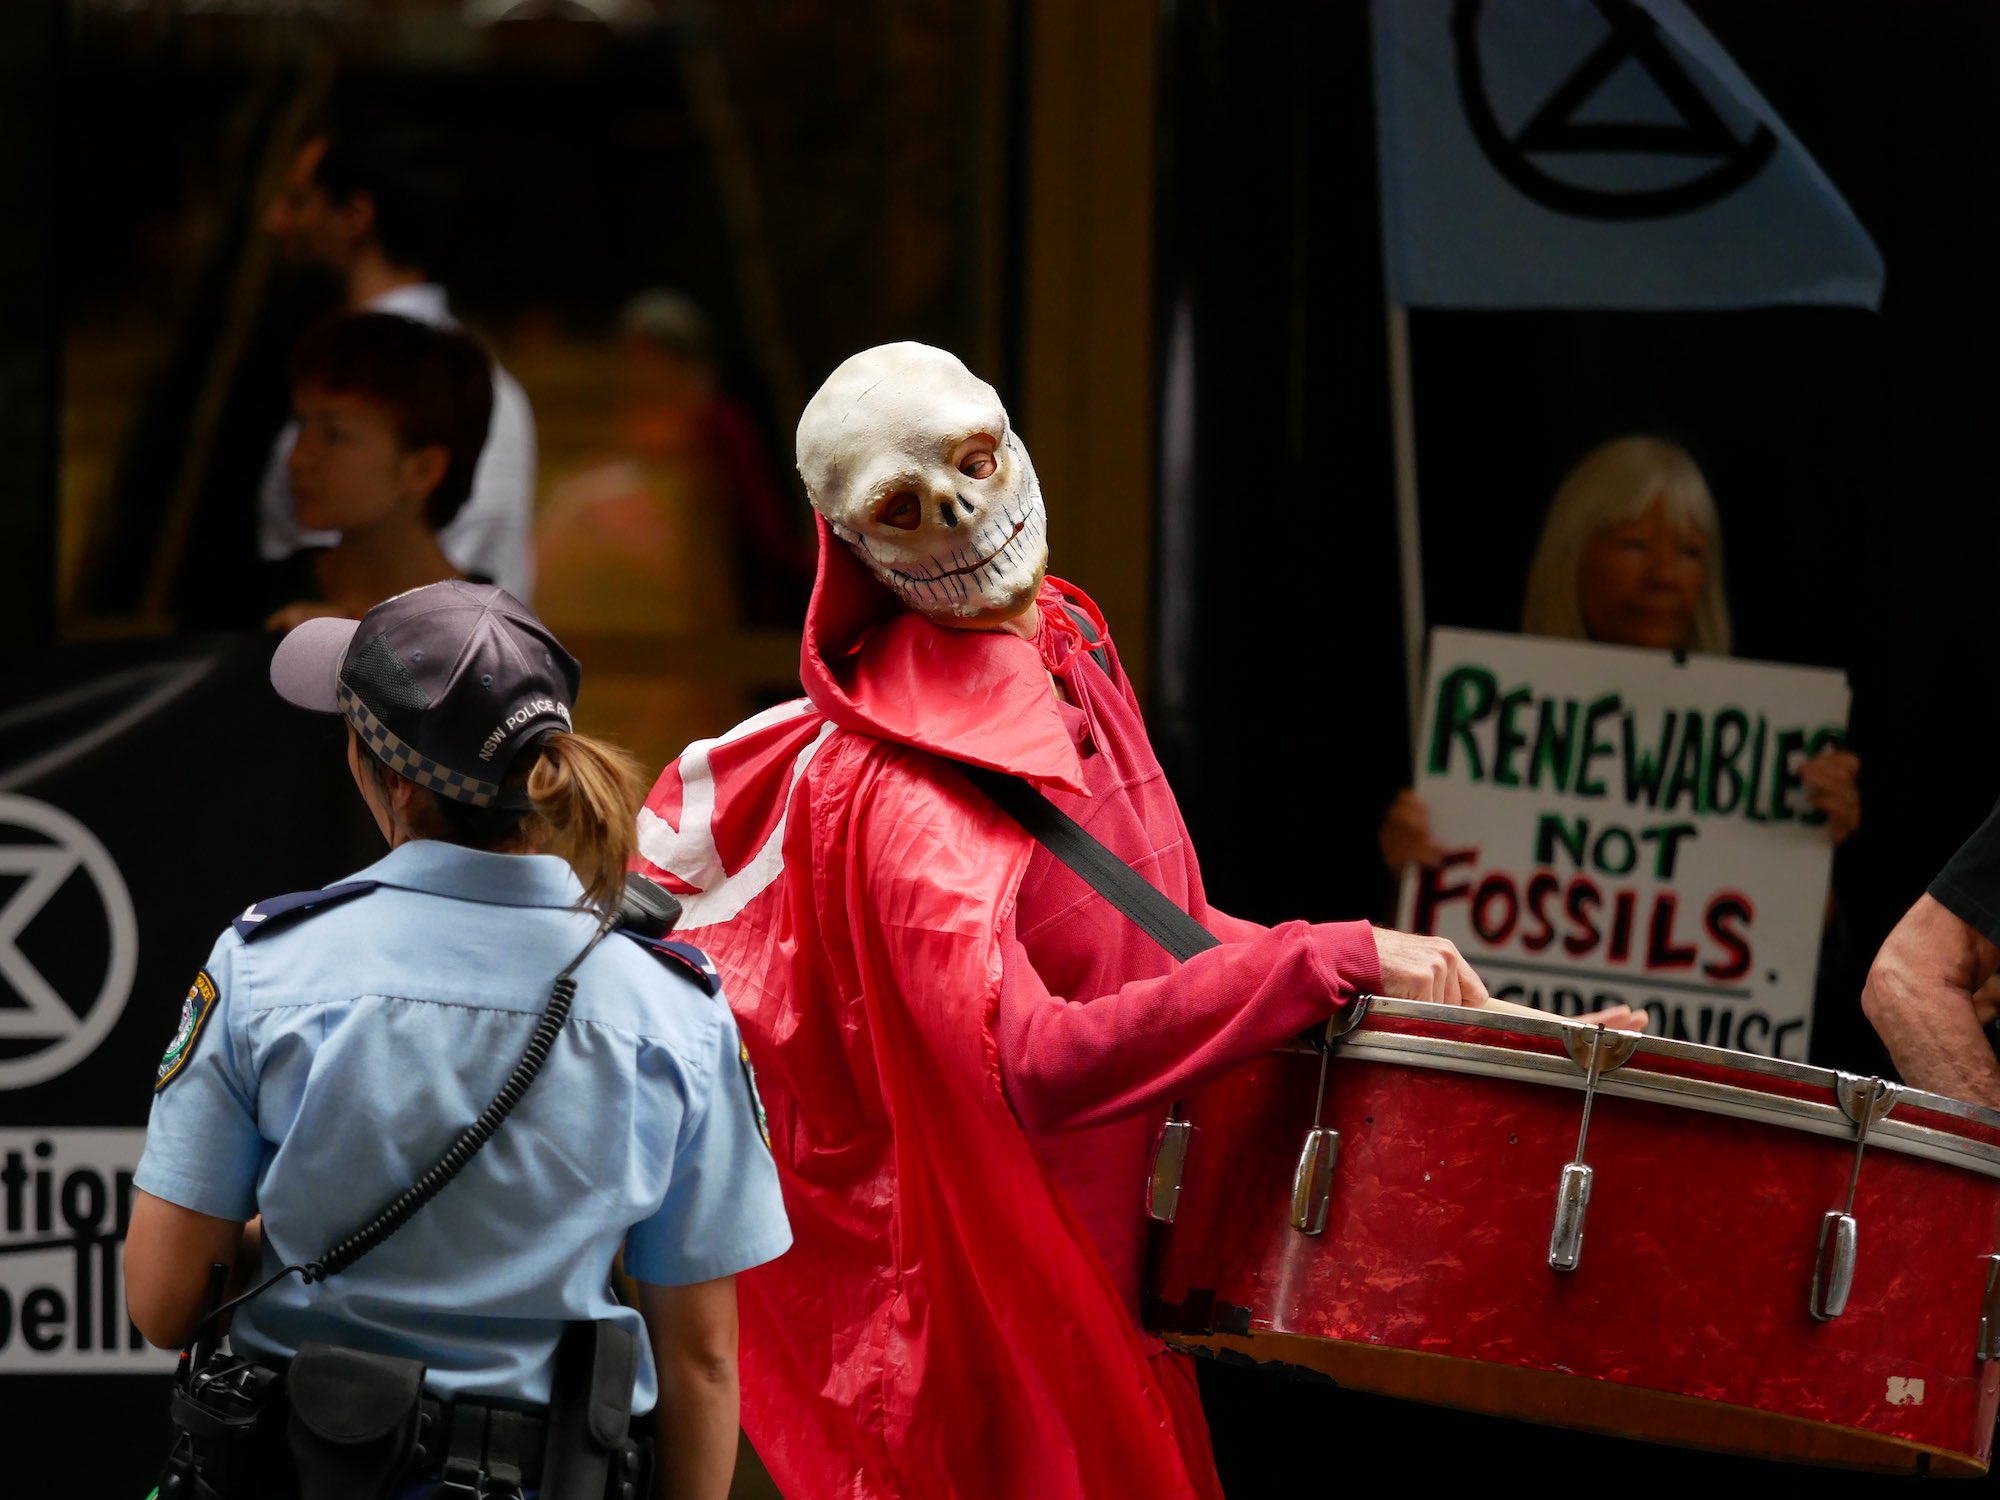 Sydney, Australia. Rebels block the National Australia Bank & tell it notto nab their future.